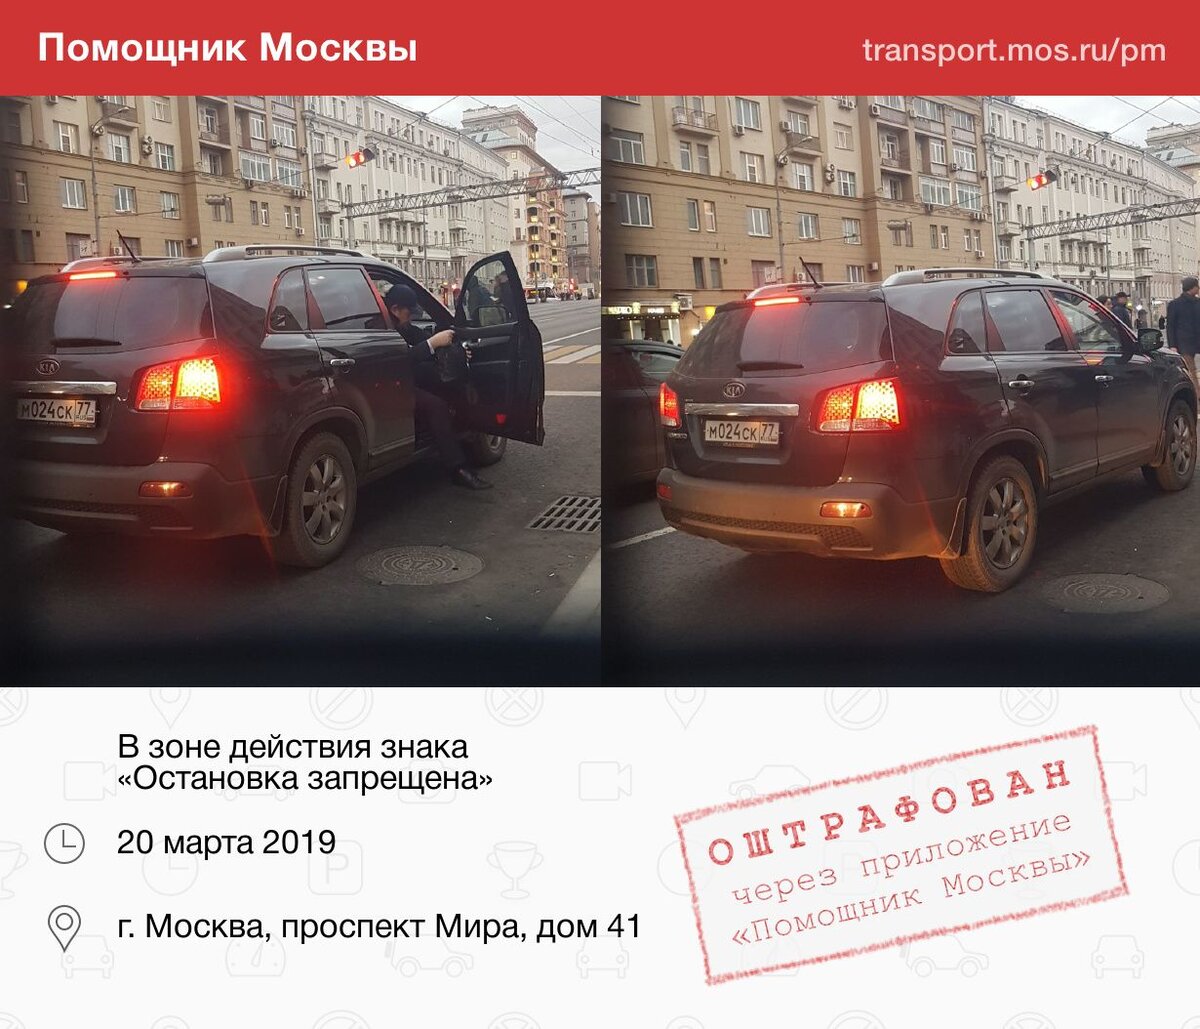 Москва оштрафовано. Остановка запрещена штраф в Москве. Штраф под знак стоянка запрещена. Штраф за парковку под знаком. Штраф за парковку под знаком остановка запрещена.